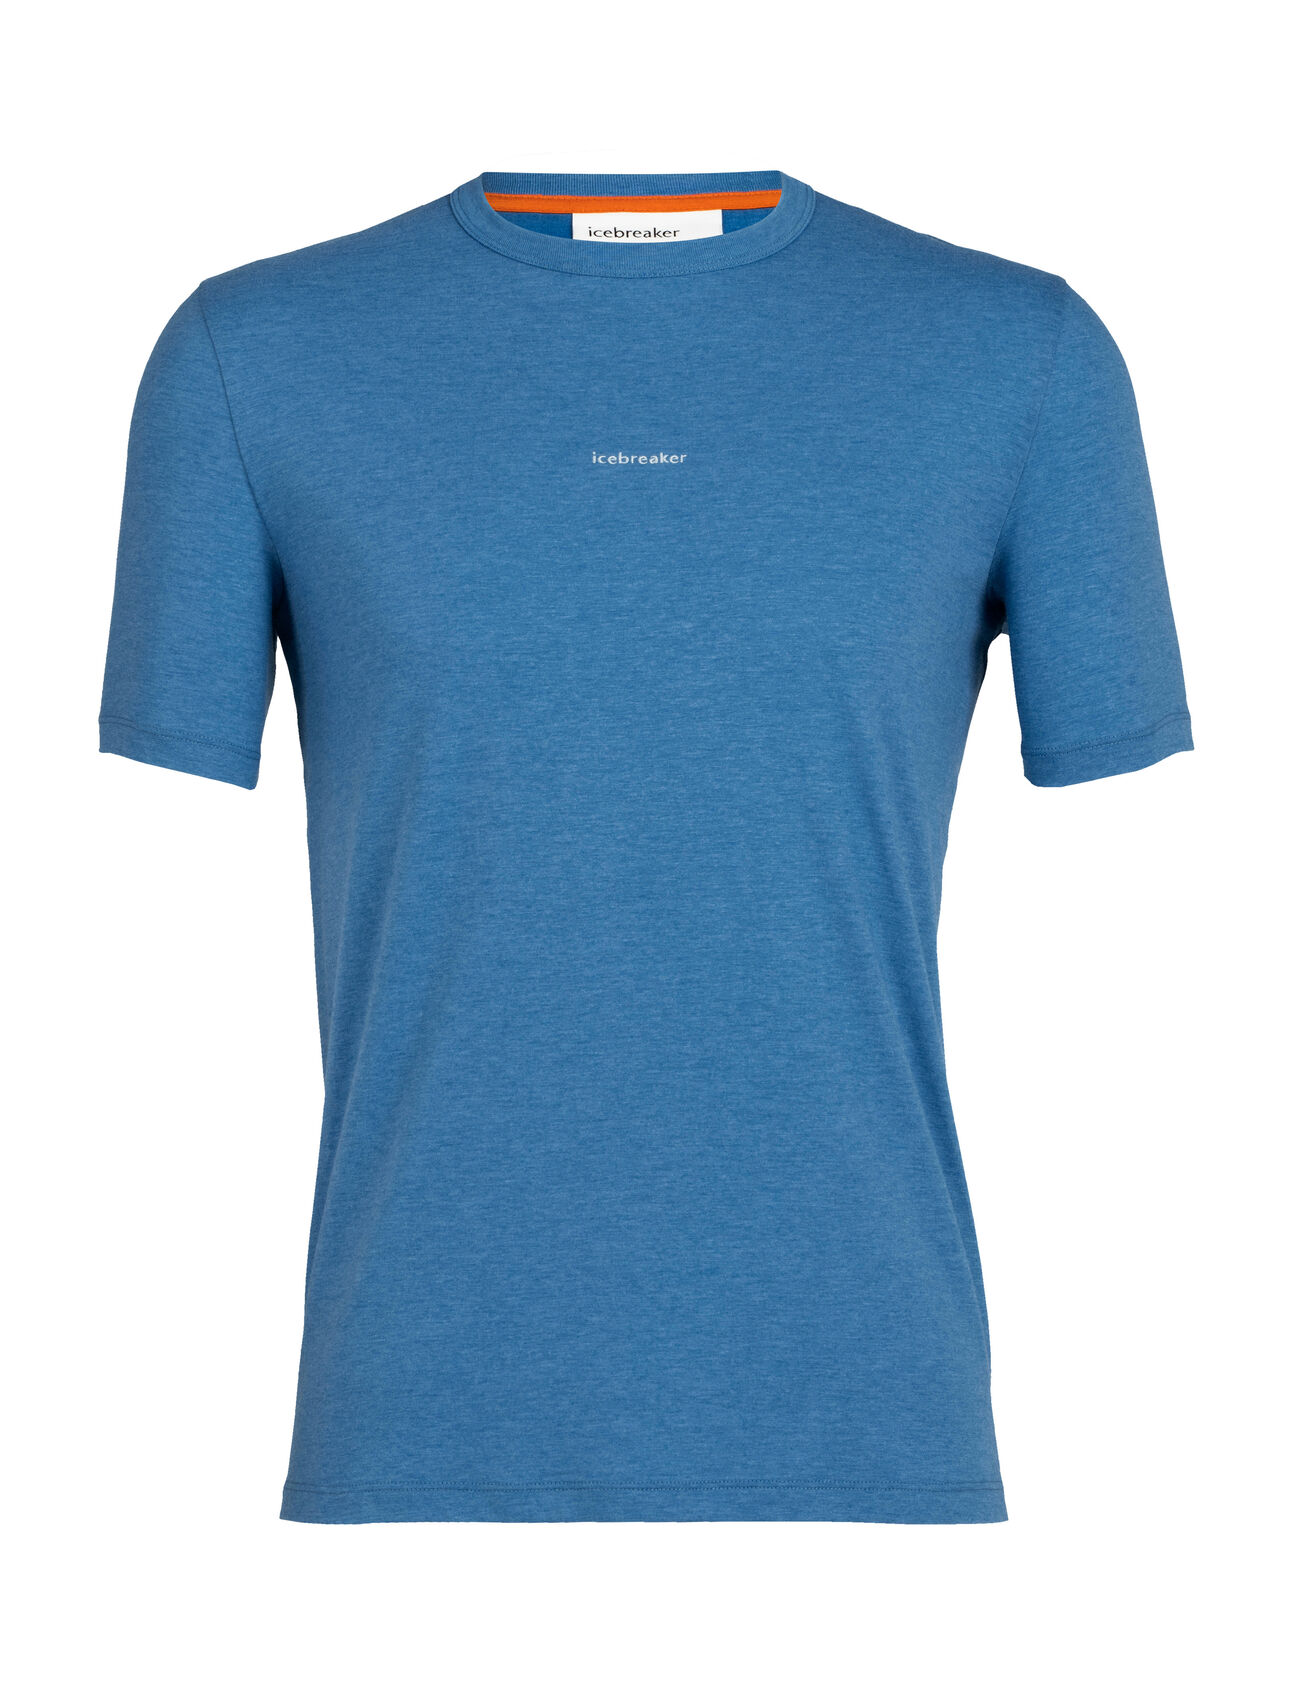 Merino Central Short Sleeve T-Shirt